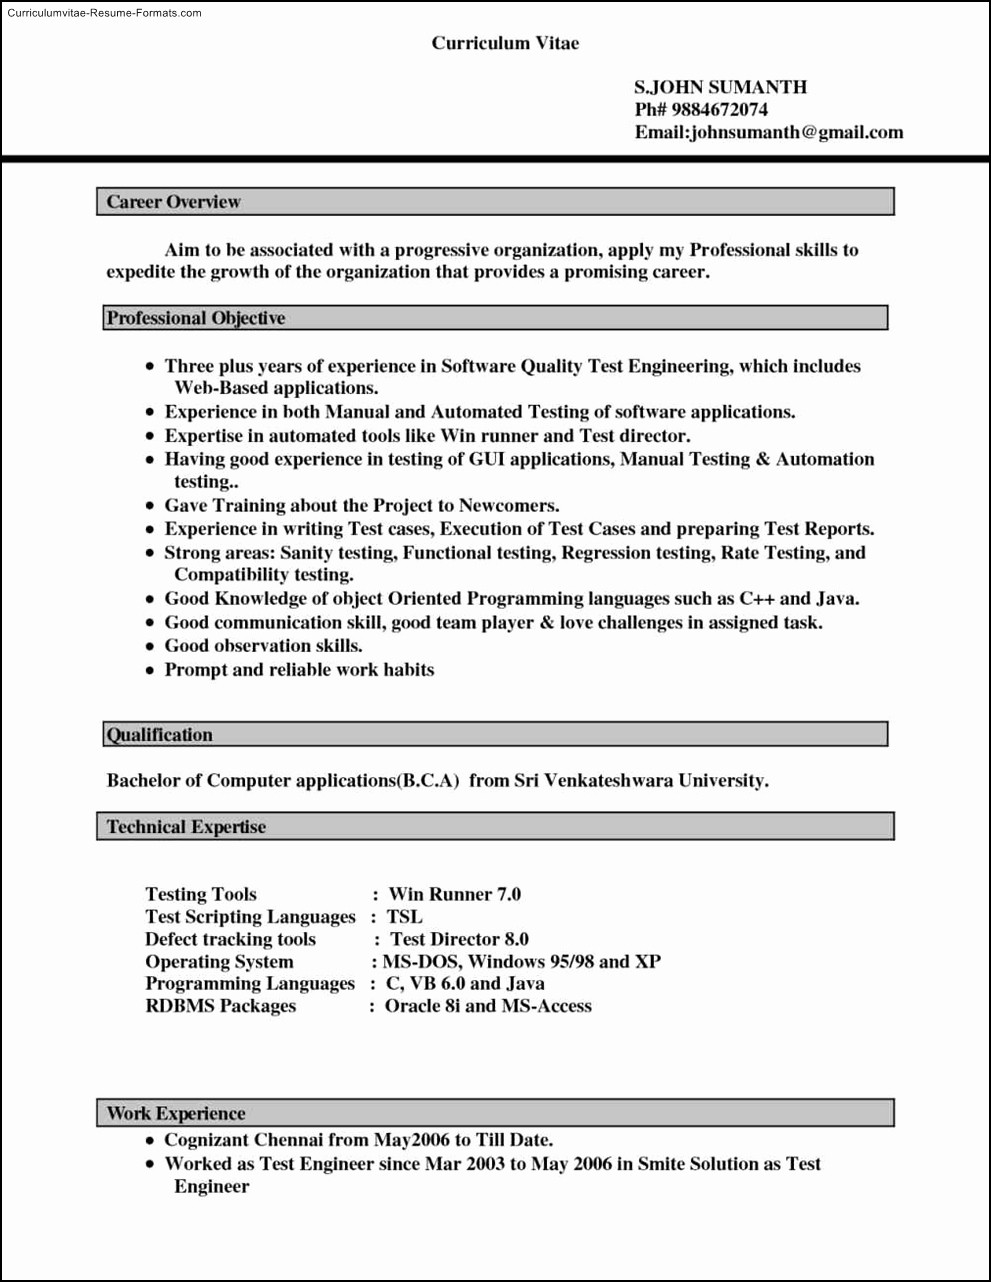 Microsoft Word Free Resume Templates Unique Free Resume Templates for Microsoft Word 2007 Free